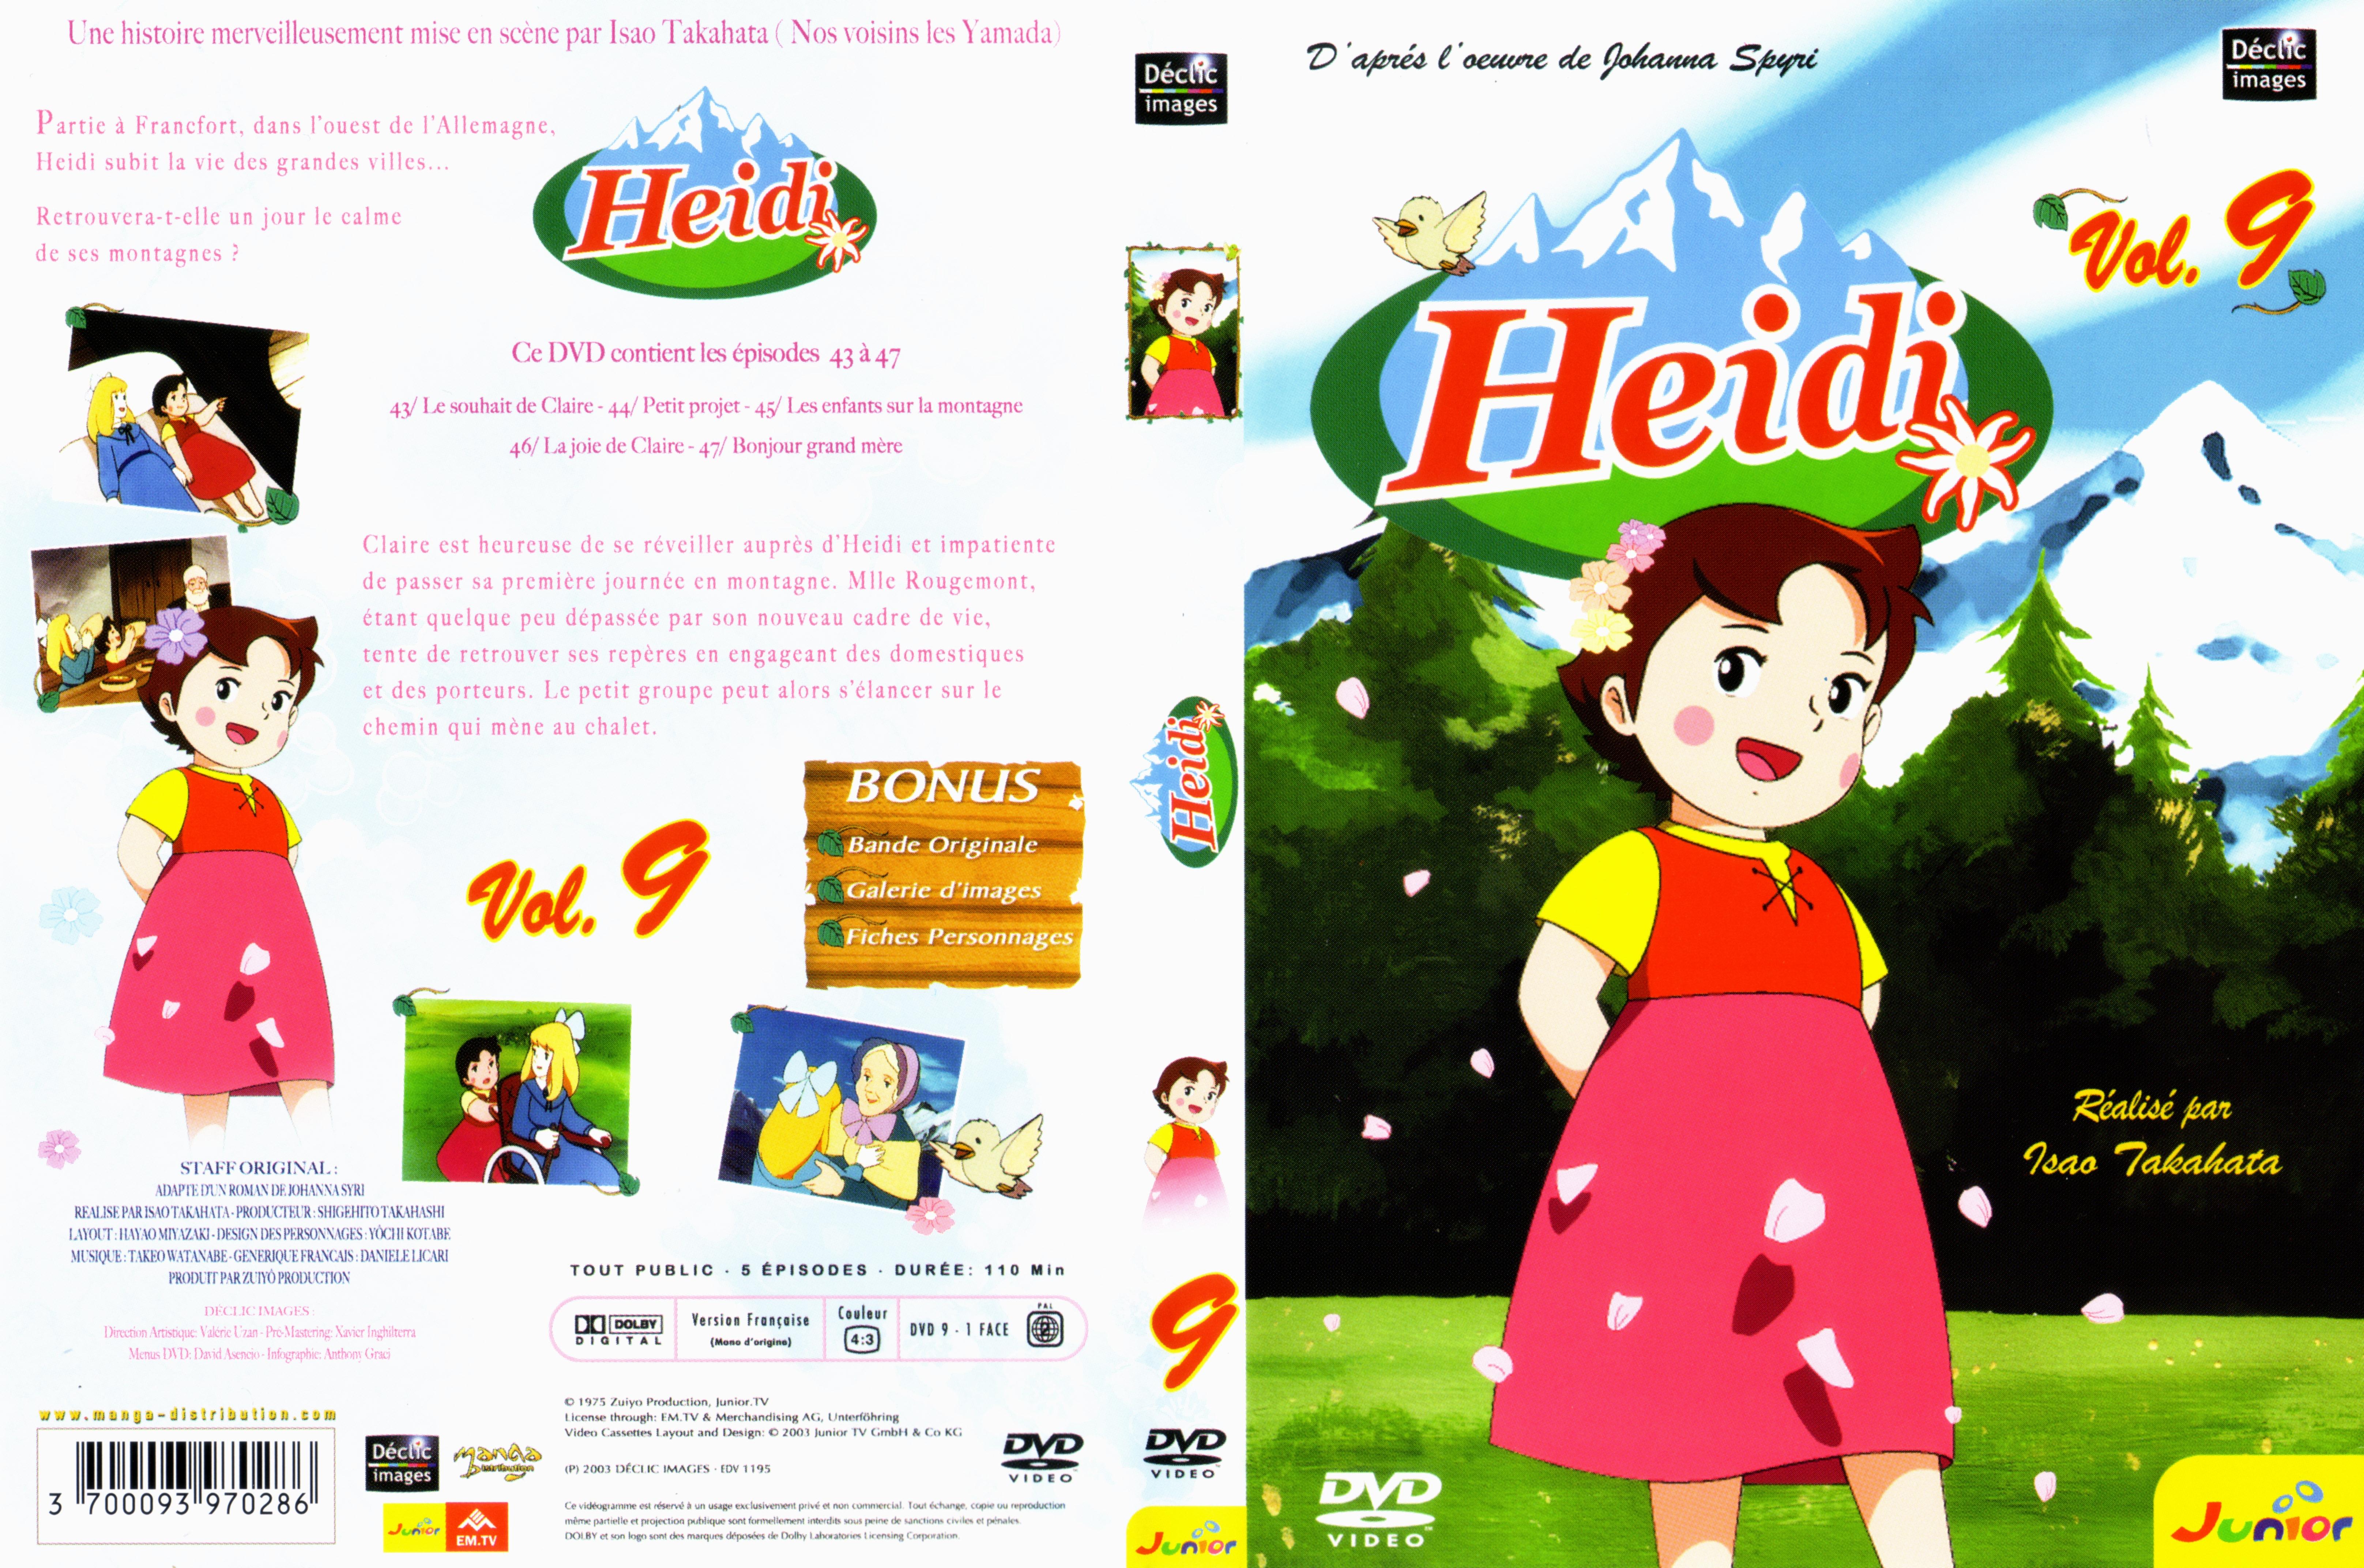 Jaquette DVD Heidi DVD 09